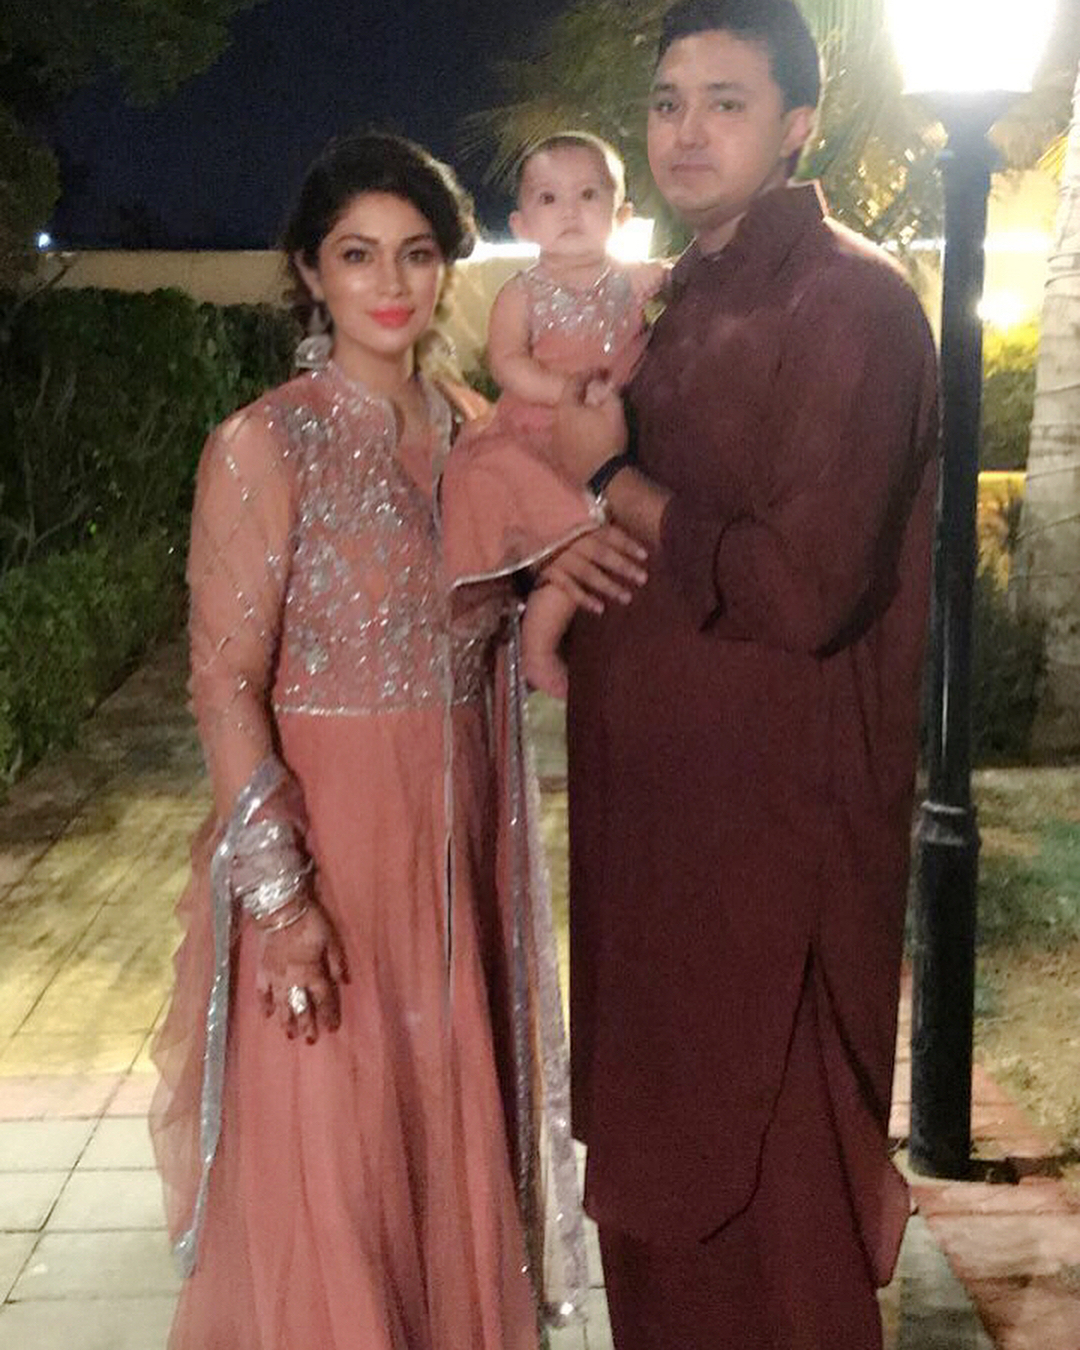 New Photos of Actress Sidra Batool with her Husband and Daughter at a Wedding Event